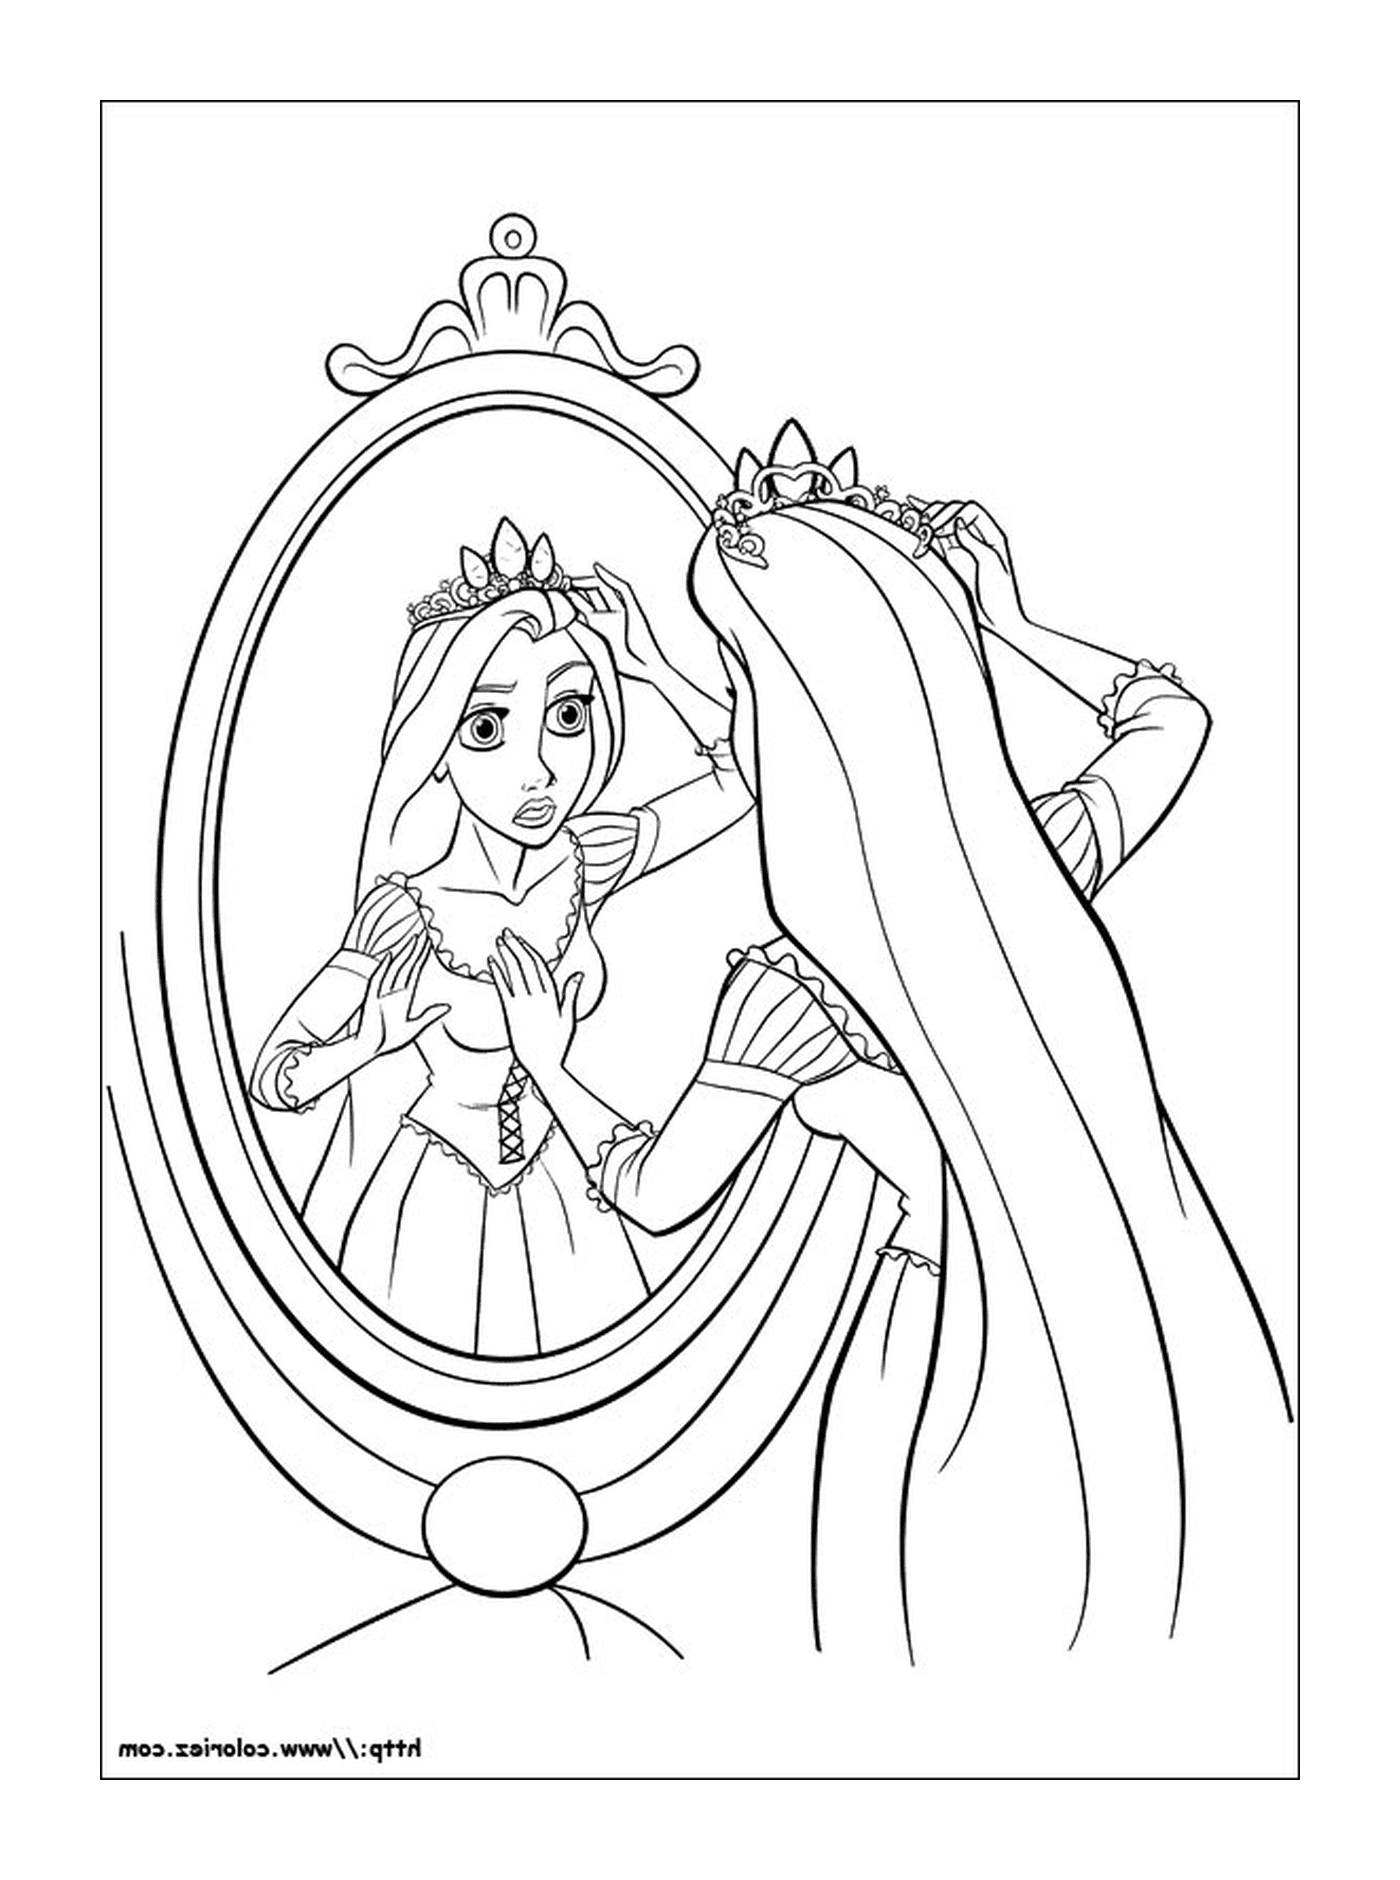  Princess Raiponce, majestic crown 